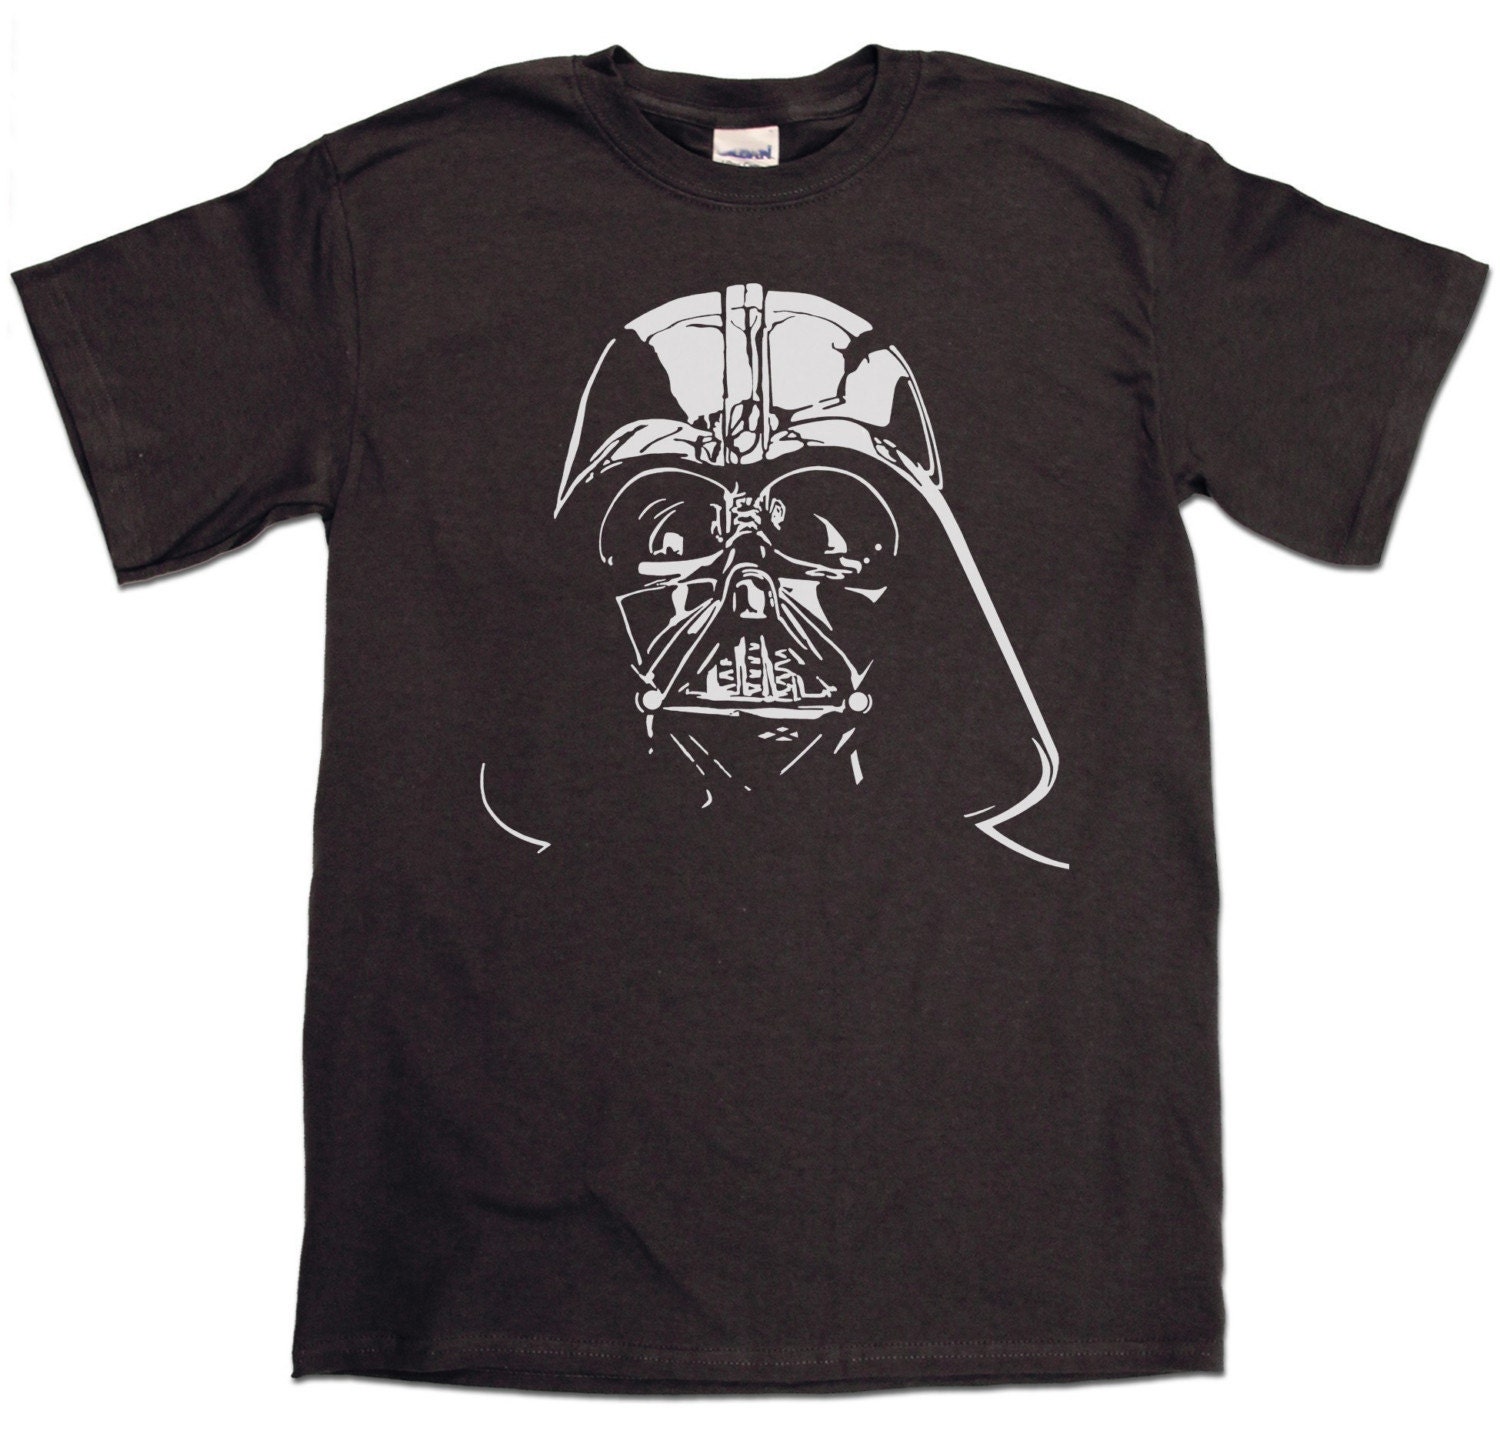 DARTH VADER MASK Vintage Style Star Wars T Shirt Unisex S M